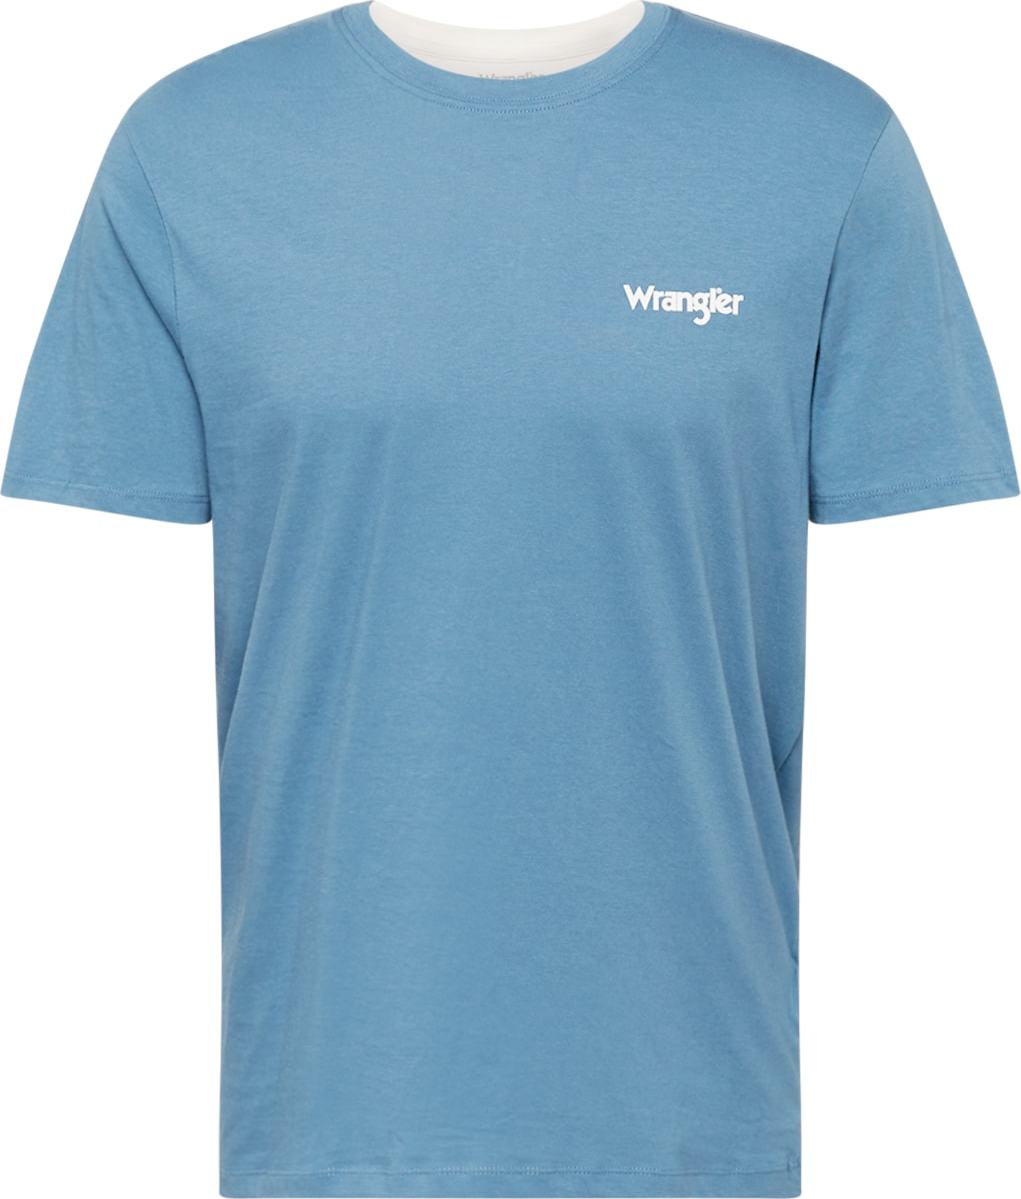 Tričko Wrangler kouřově modrá / bílá